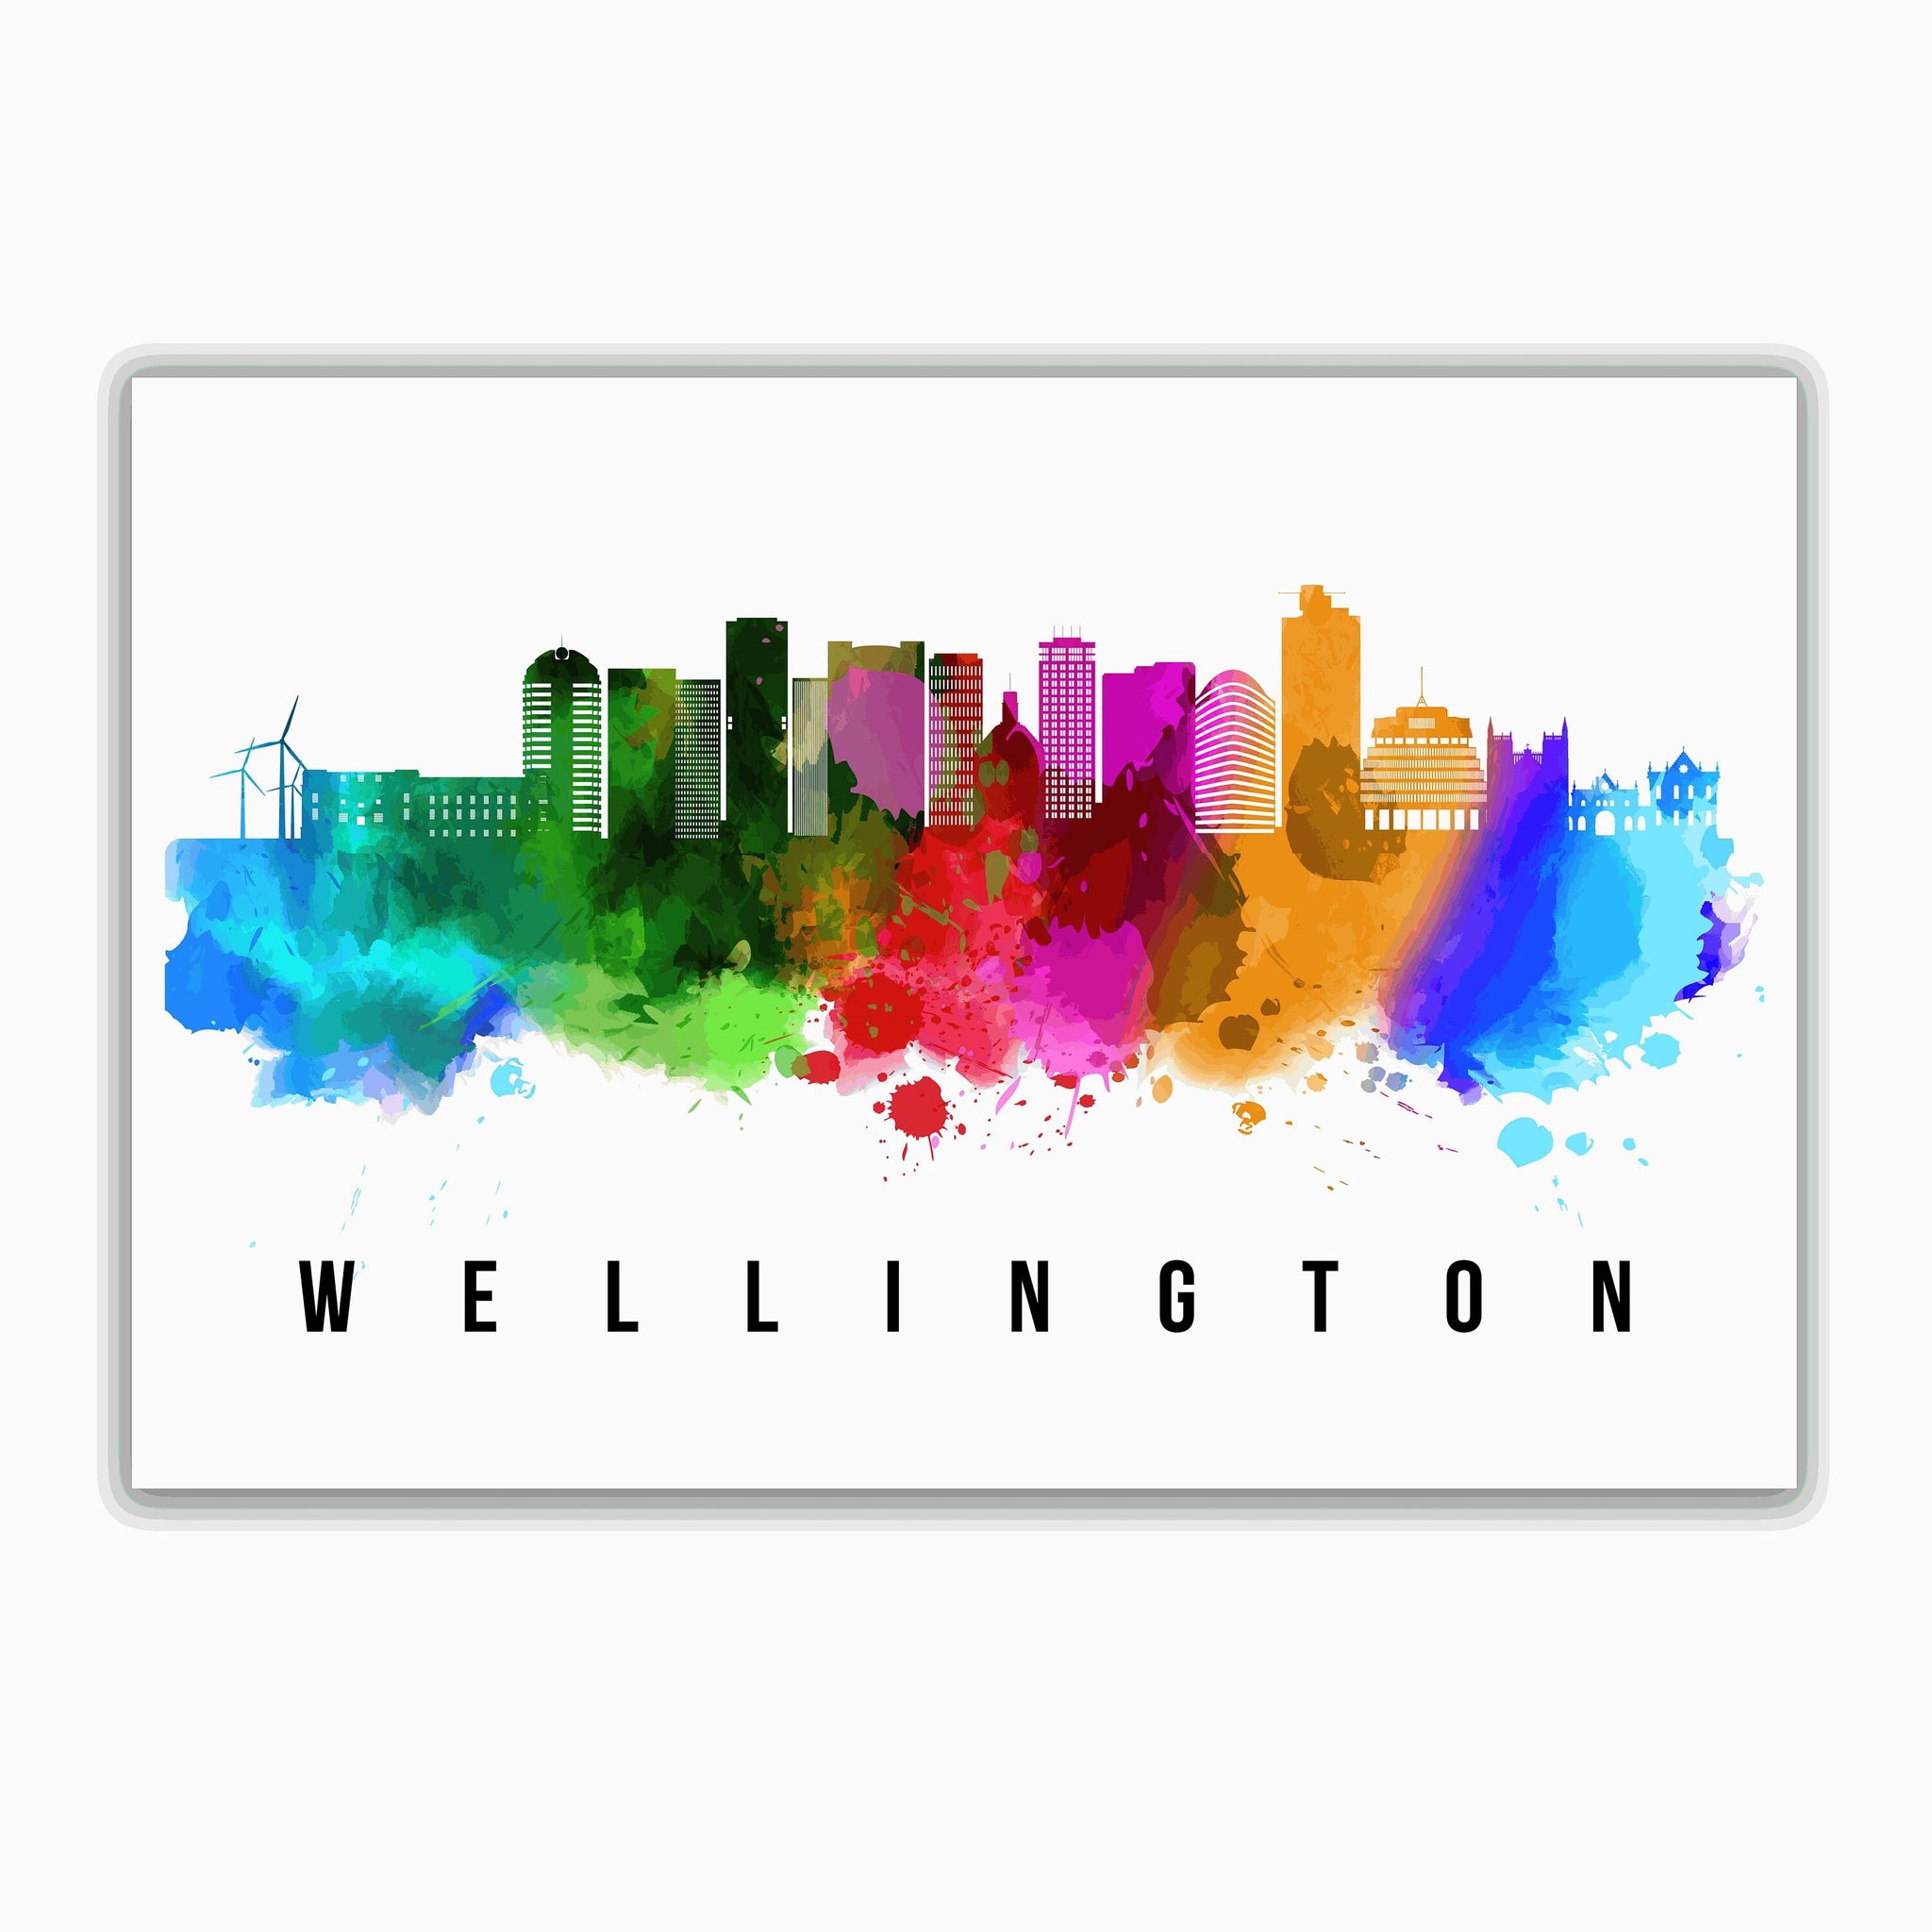 WELLINGTON - NEW ZEALAND Poster,  Skyline Poster Cityscape and Landmark Wellington Illustration Home Wall Art, Office Decor